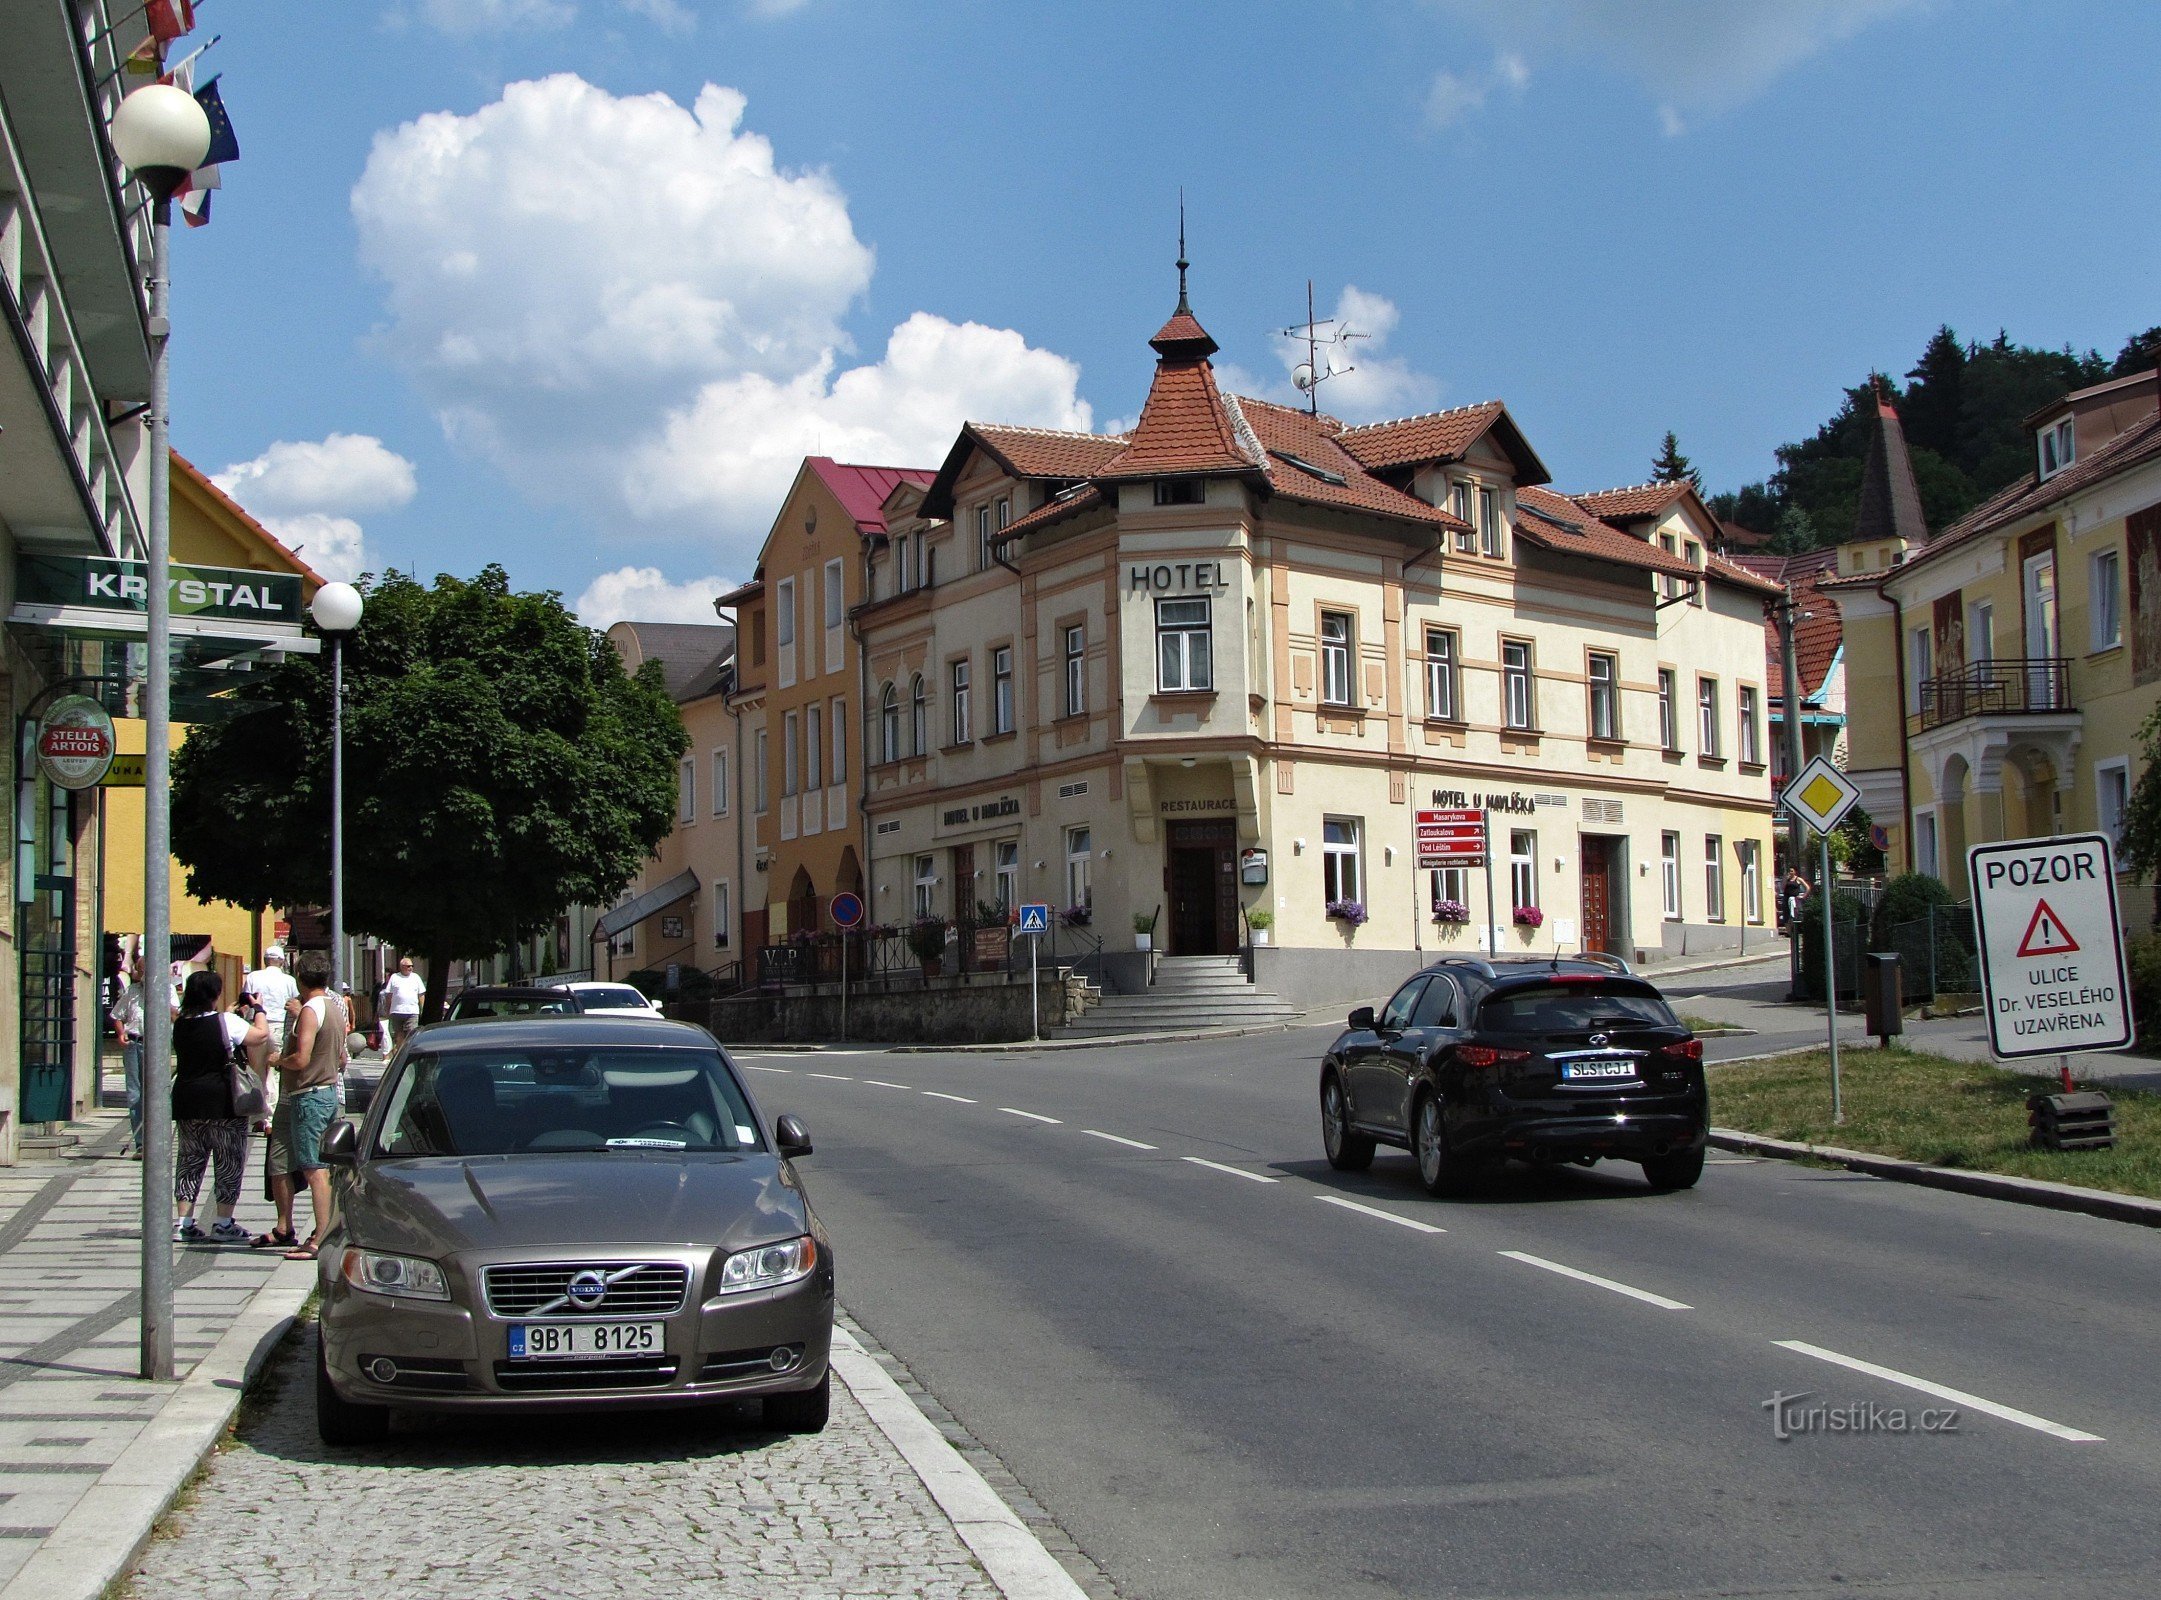 Boende på hotellet Havlíček i Luhačovice